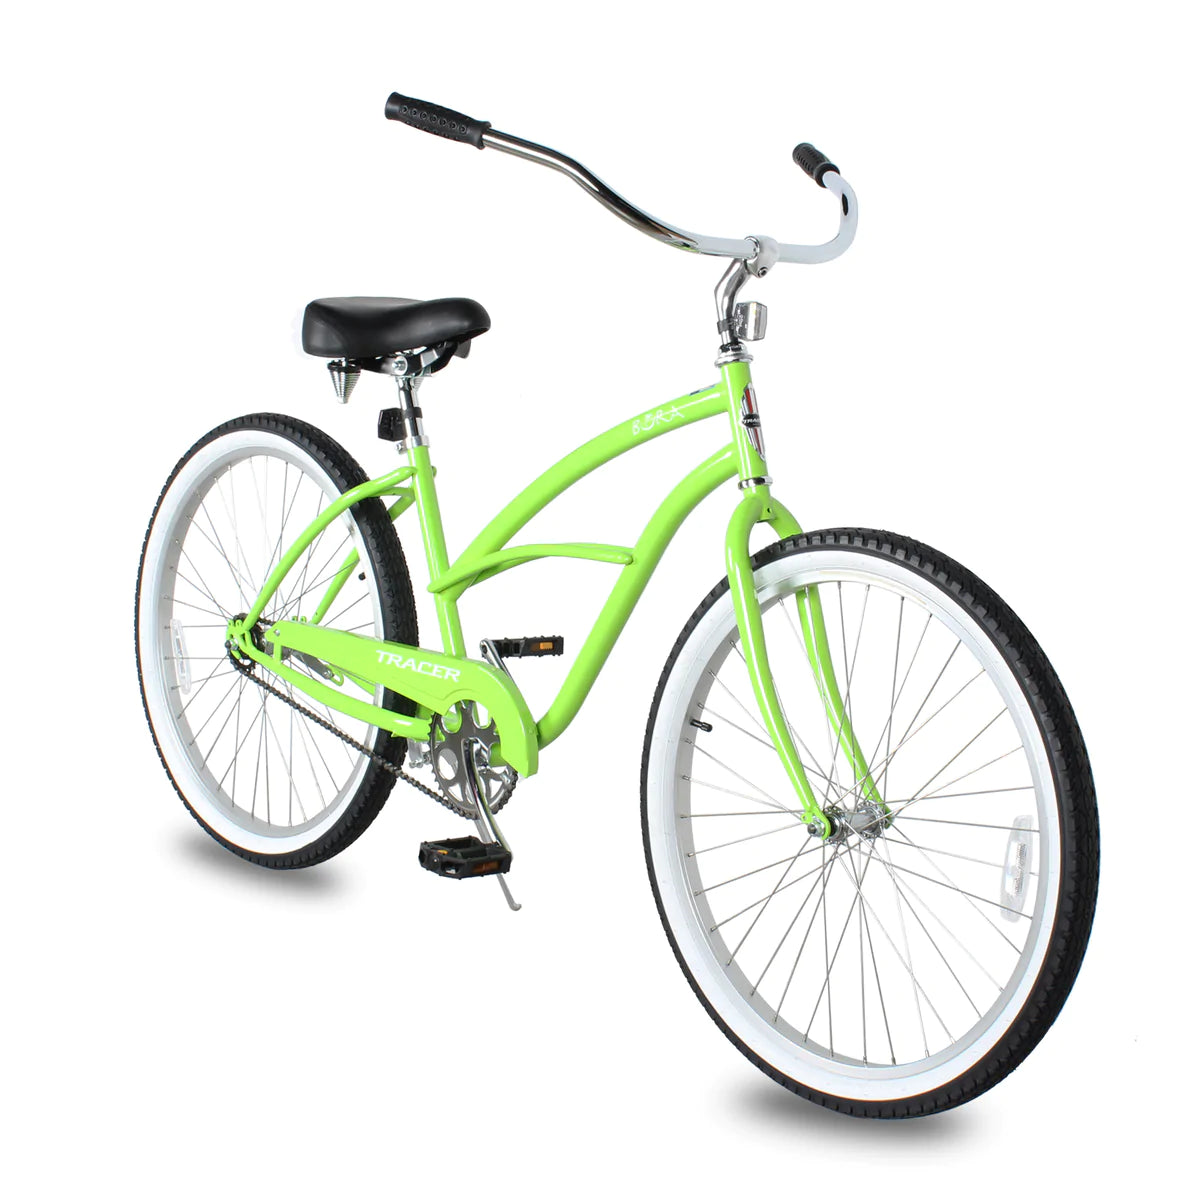 Tracer Bora 26" Beach Cruiser Bike For Women - Mint Green | Beach Cruiser Bikes | Cruiser Bikes | Beach Bikes | Single Speed | Single Speed Cycle | Adult Bike | Bike Lover USA